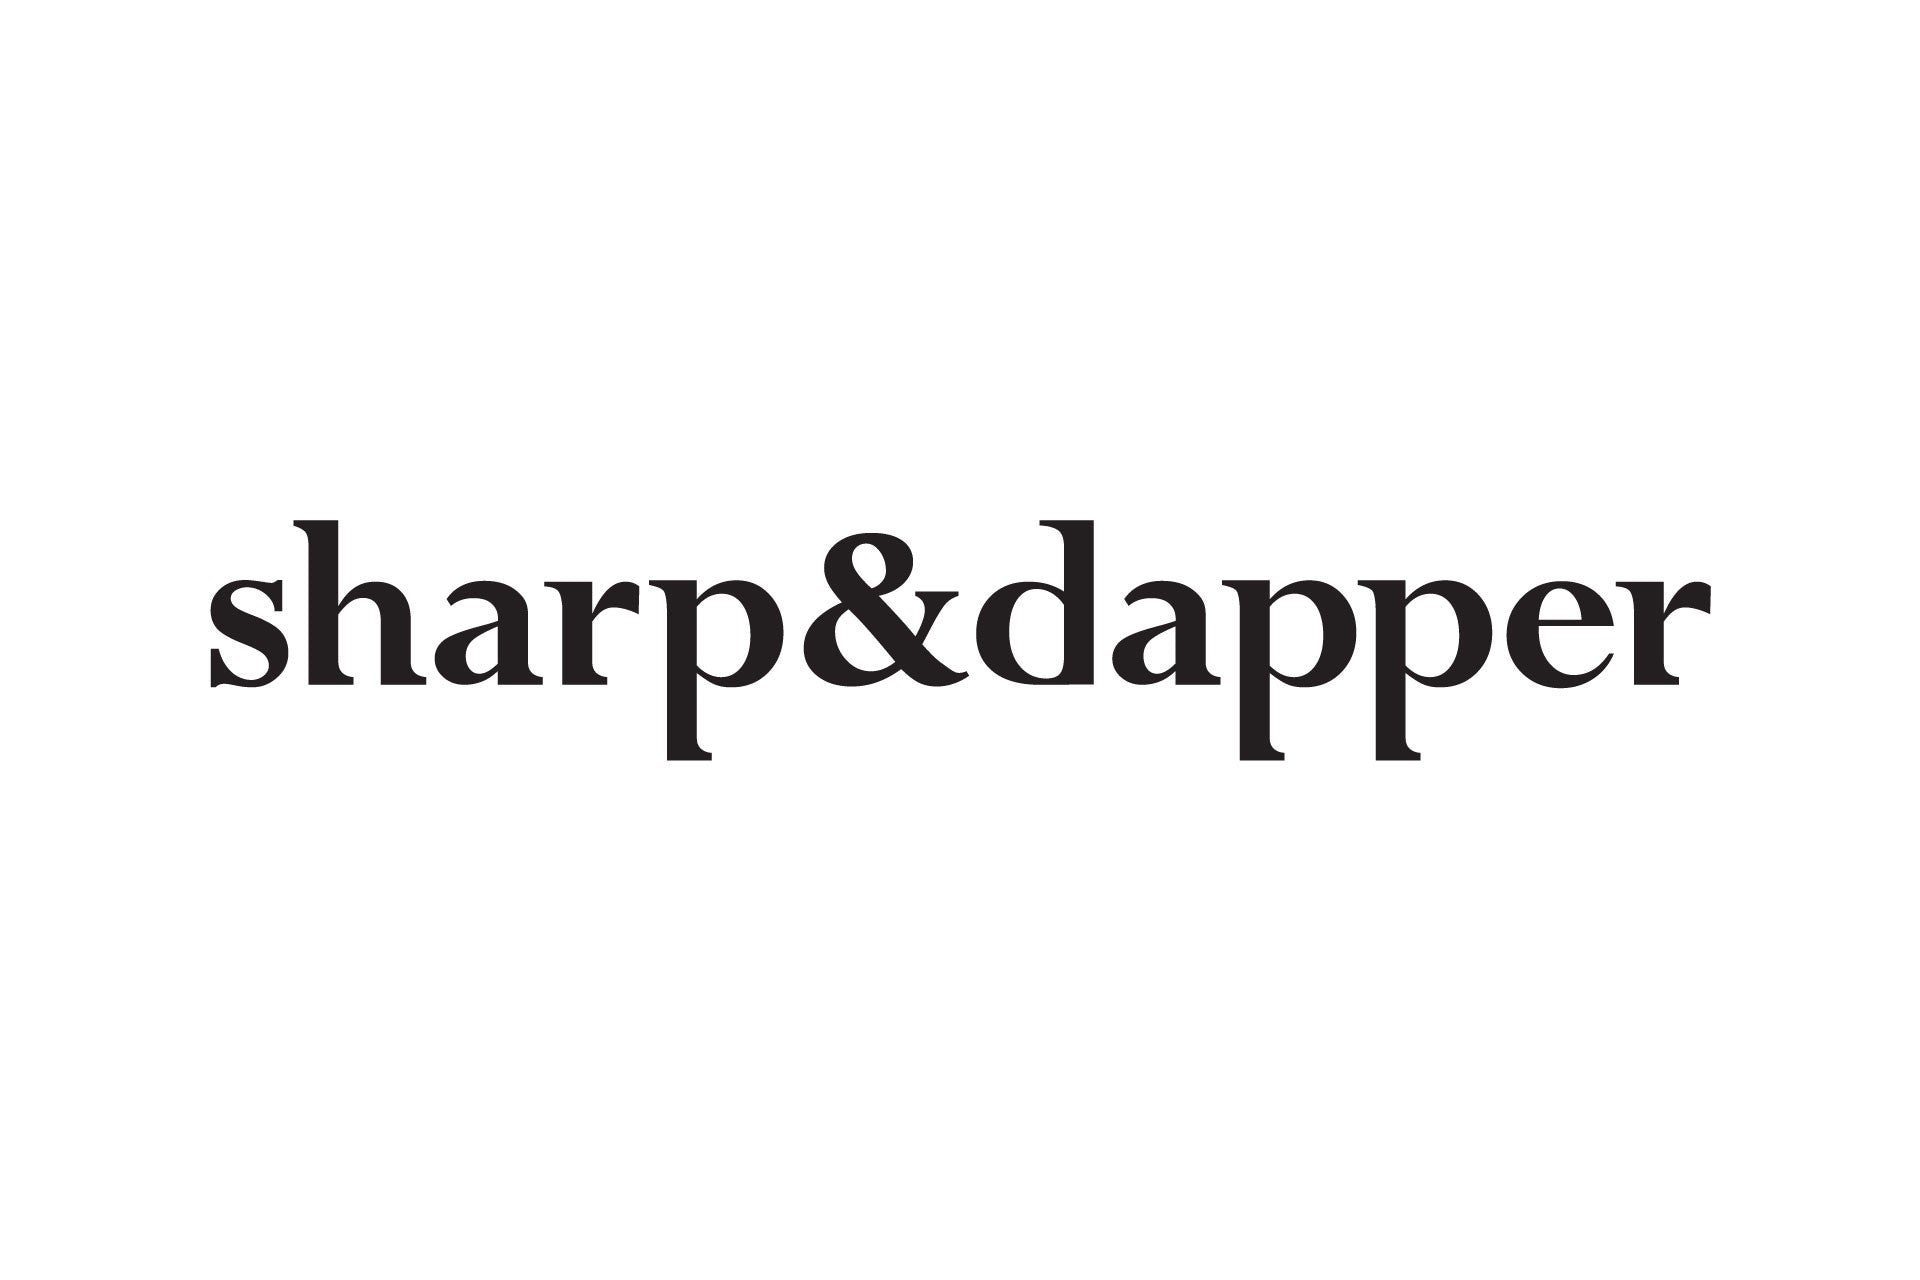 sharp&dapper - A Guide to Shirt Stays